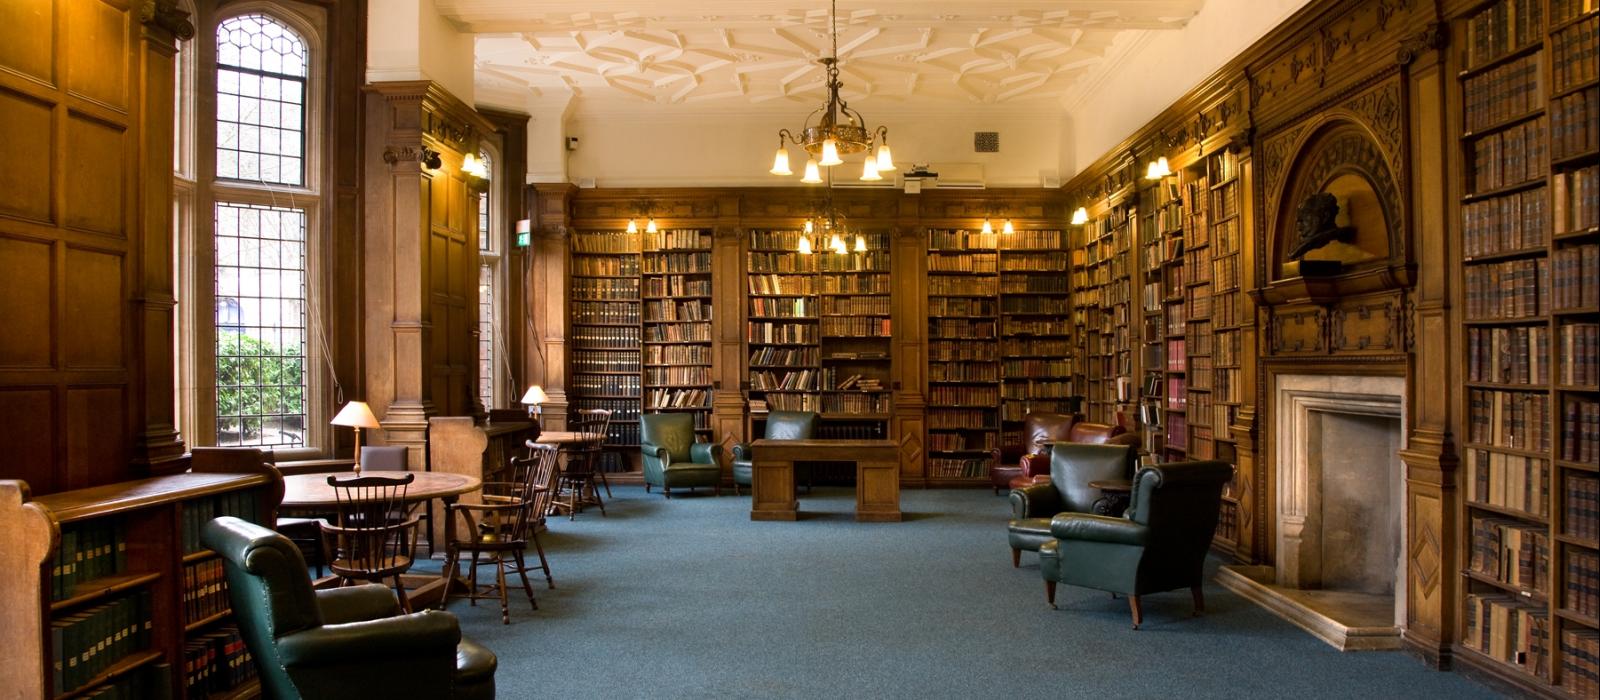 Goodman Library, Oxford Union